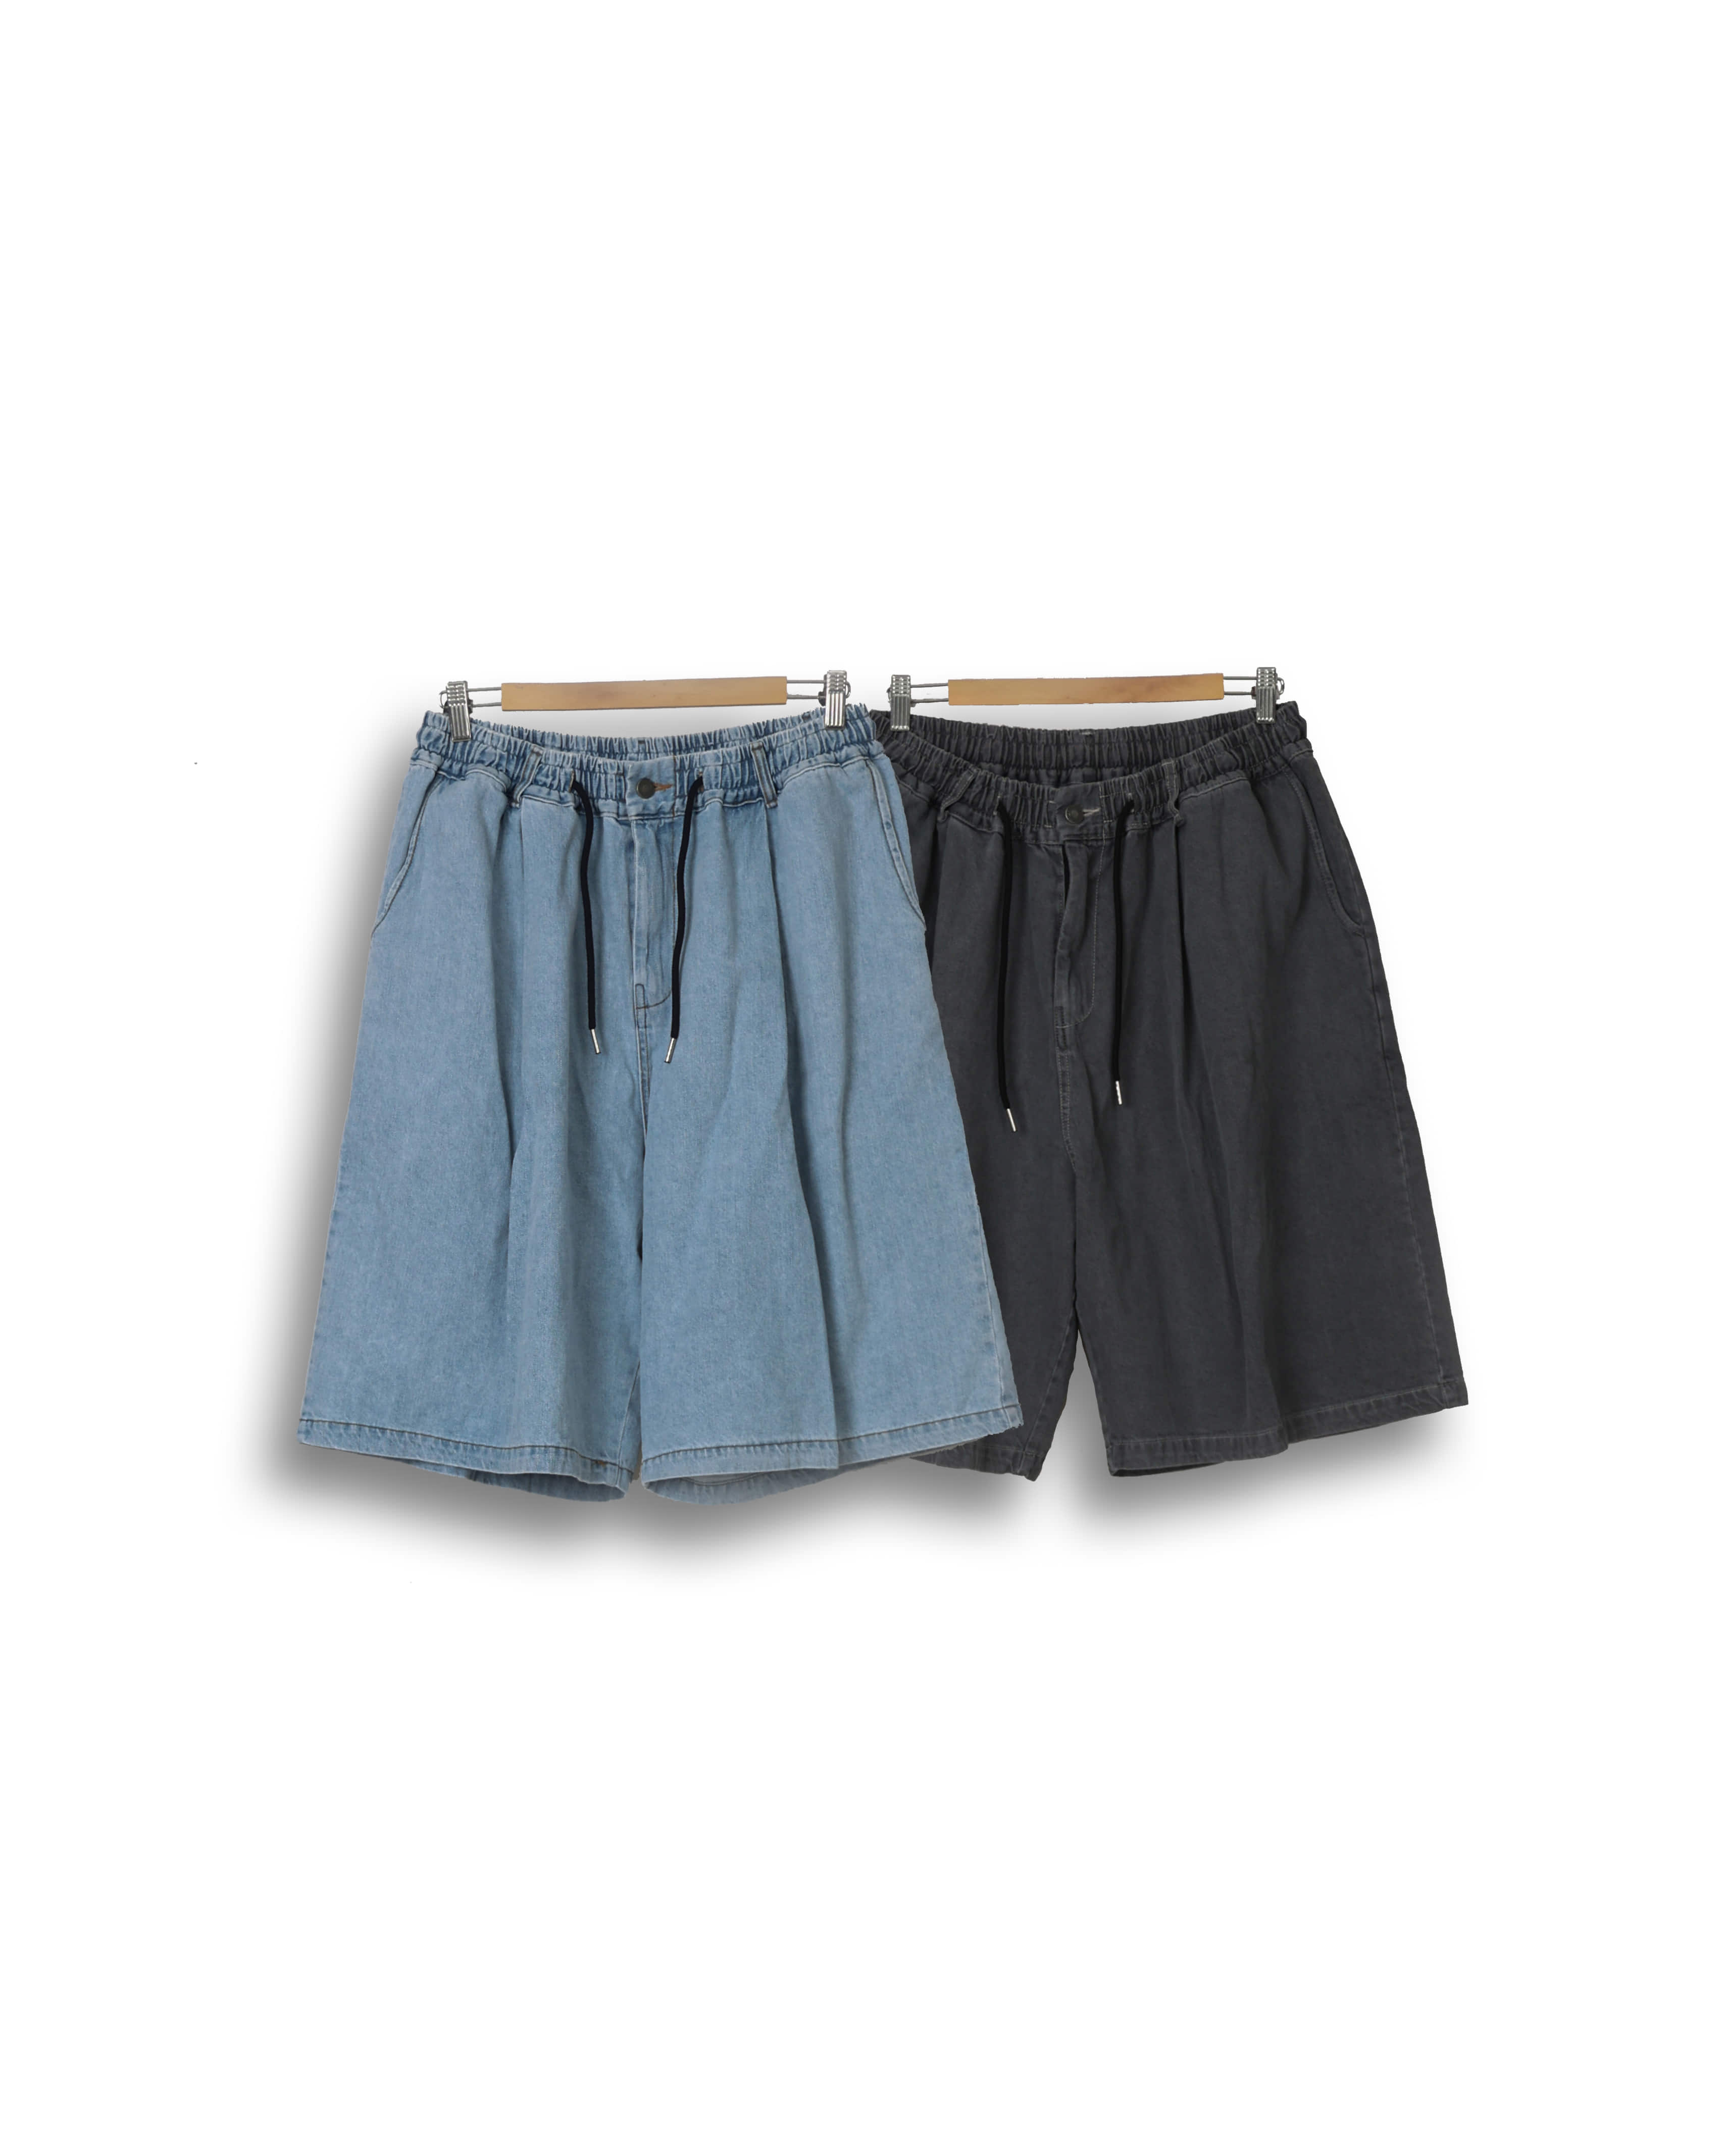 FITS 776 Washed Bermuda Denim Pants (Gray Denim/Light Denim)